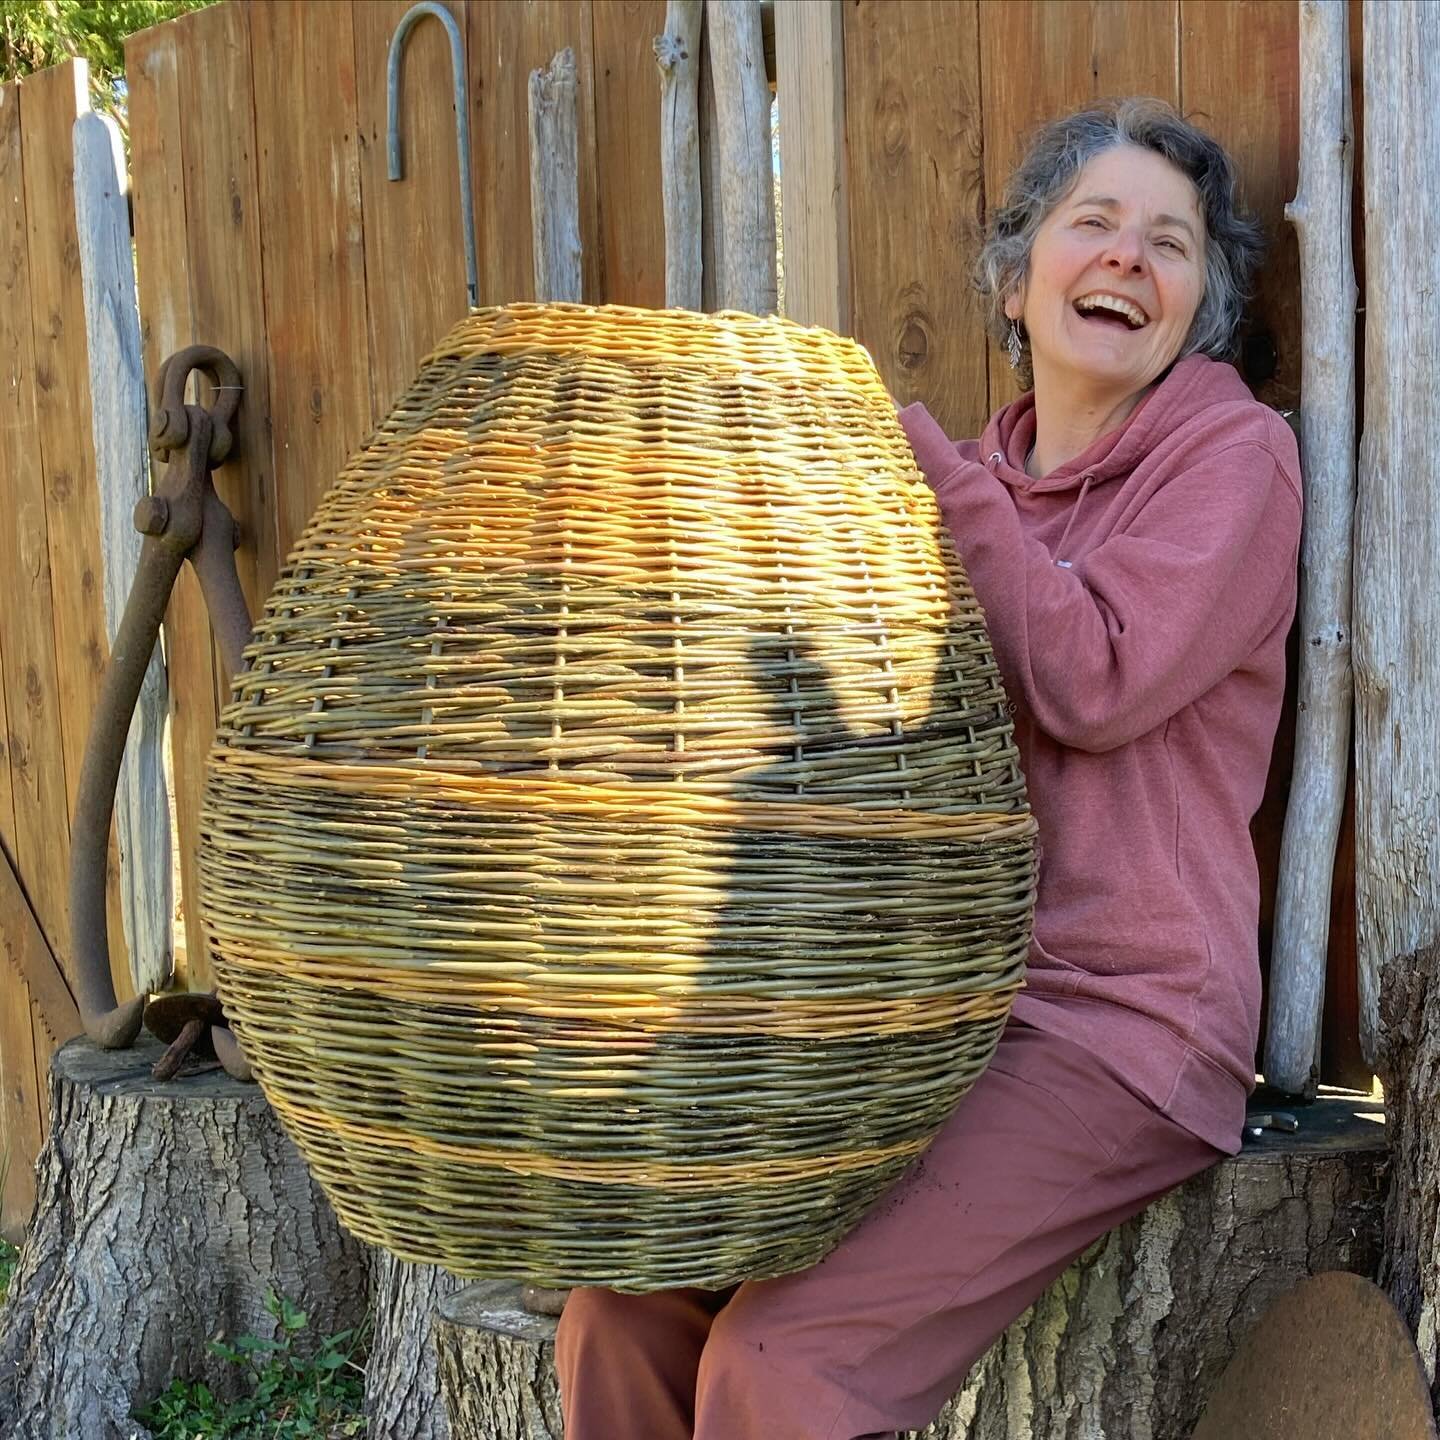 Today was all about B.I.G baskets! #justletmeweave #willow #willowbaskets #craftswoman #powellriver #qathet #bigbaskets